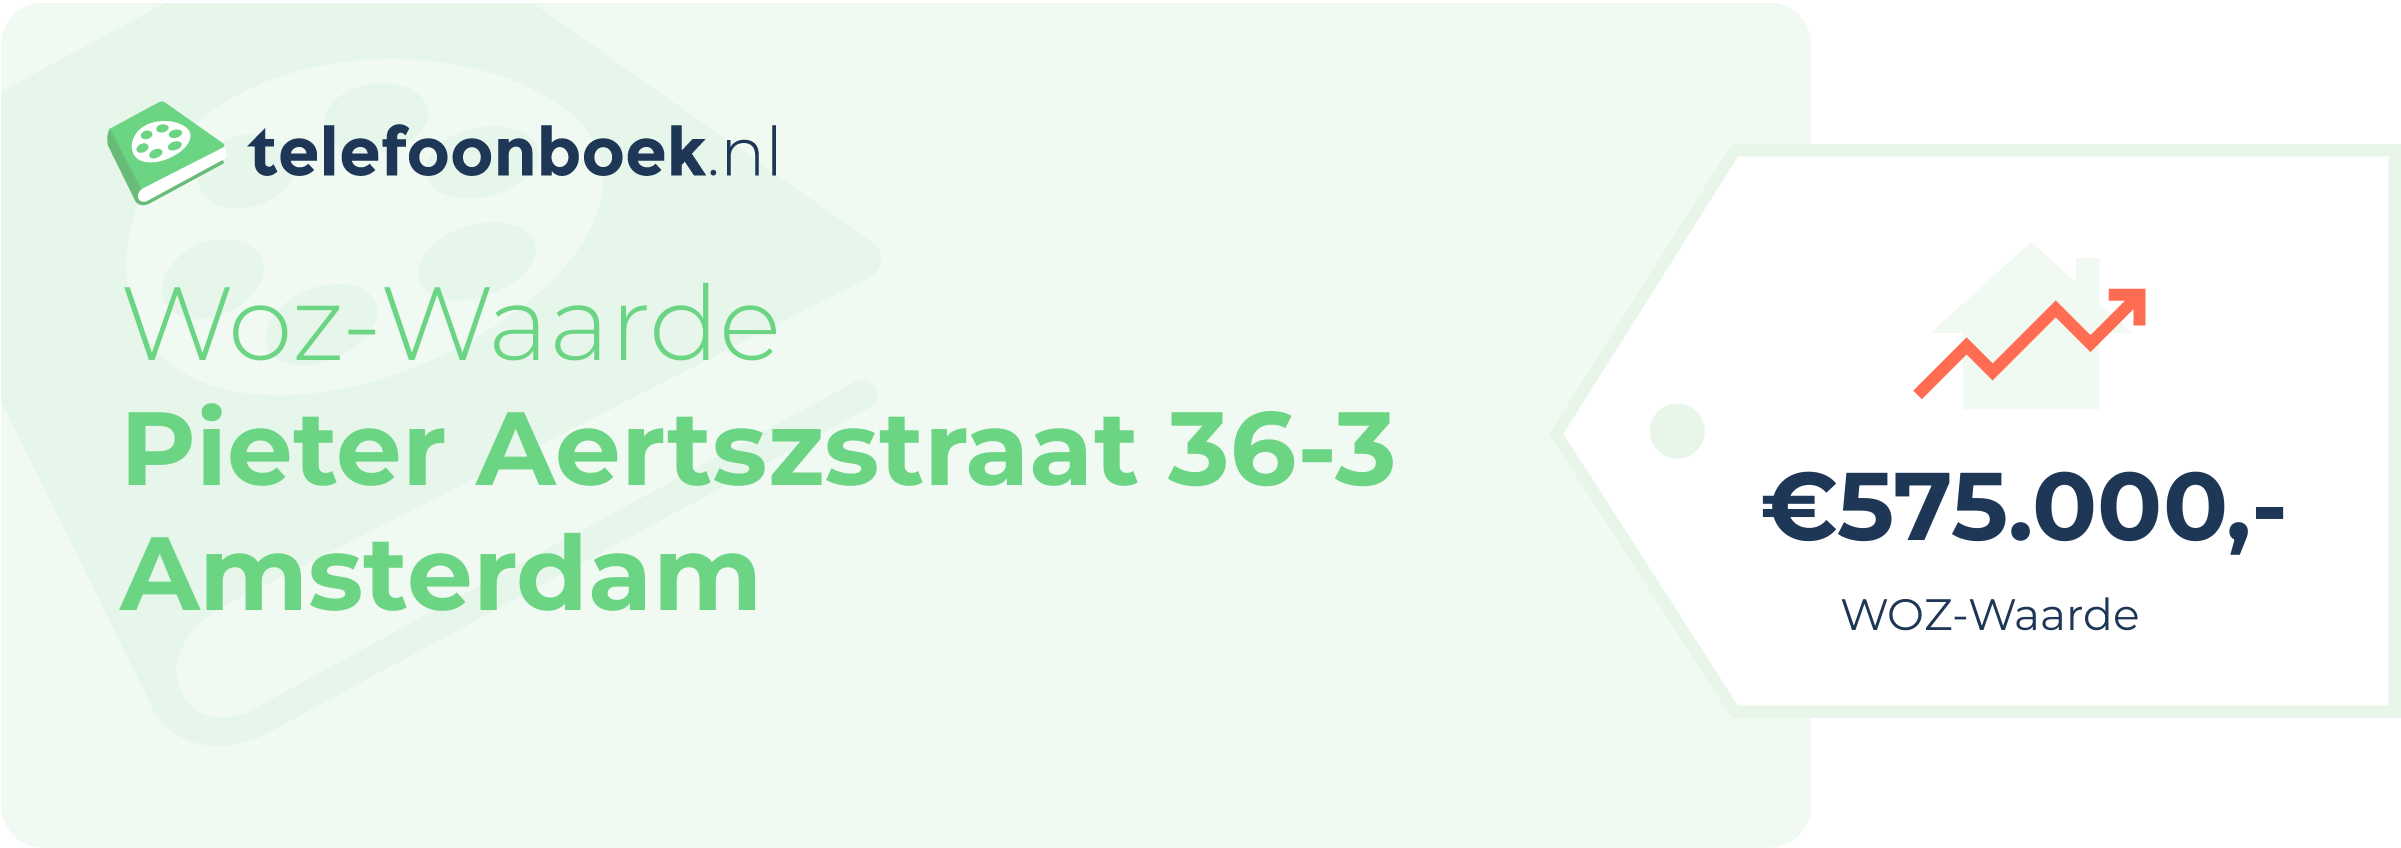 WOZ-waarde Pieter Aertszstraat 36-3 Amsterdam